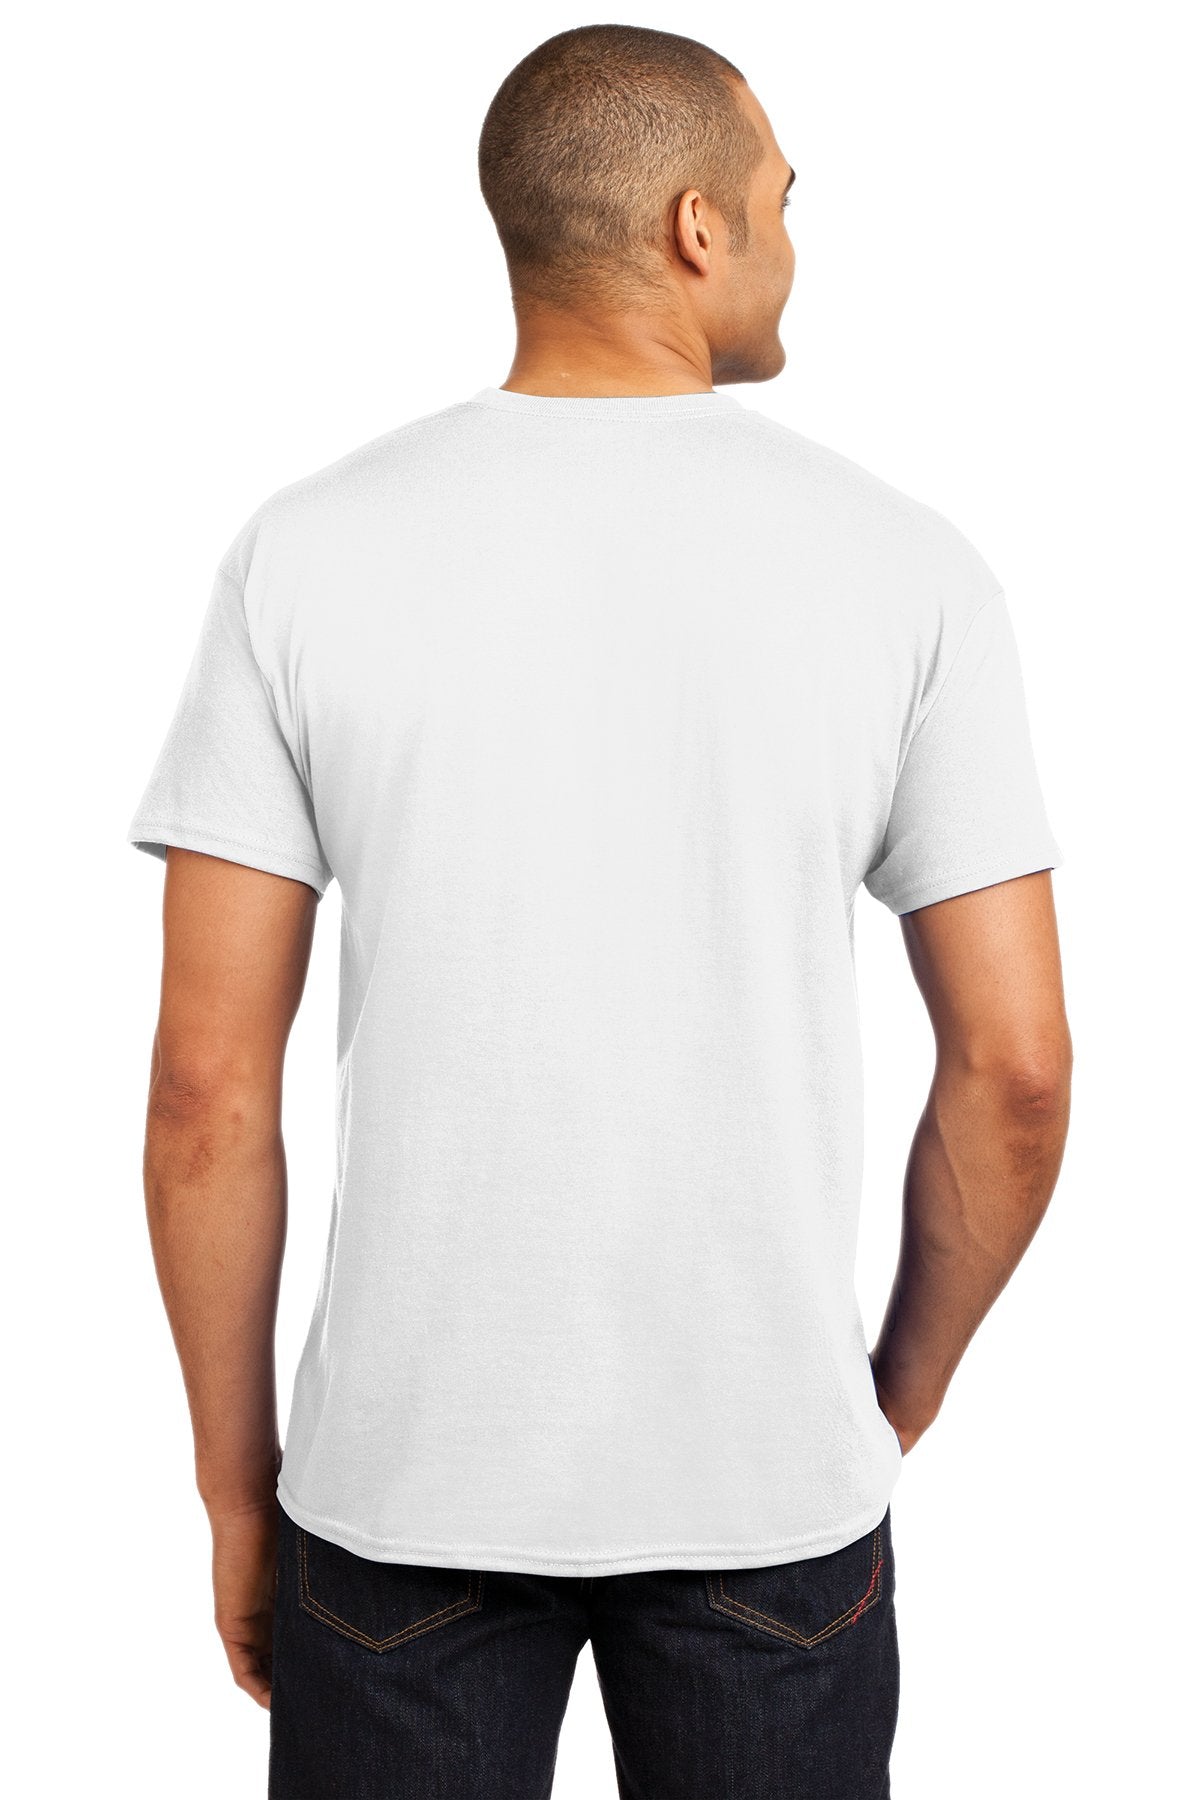 hanes ecosmart 50 50 cotton/poly t shirt 5170 white